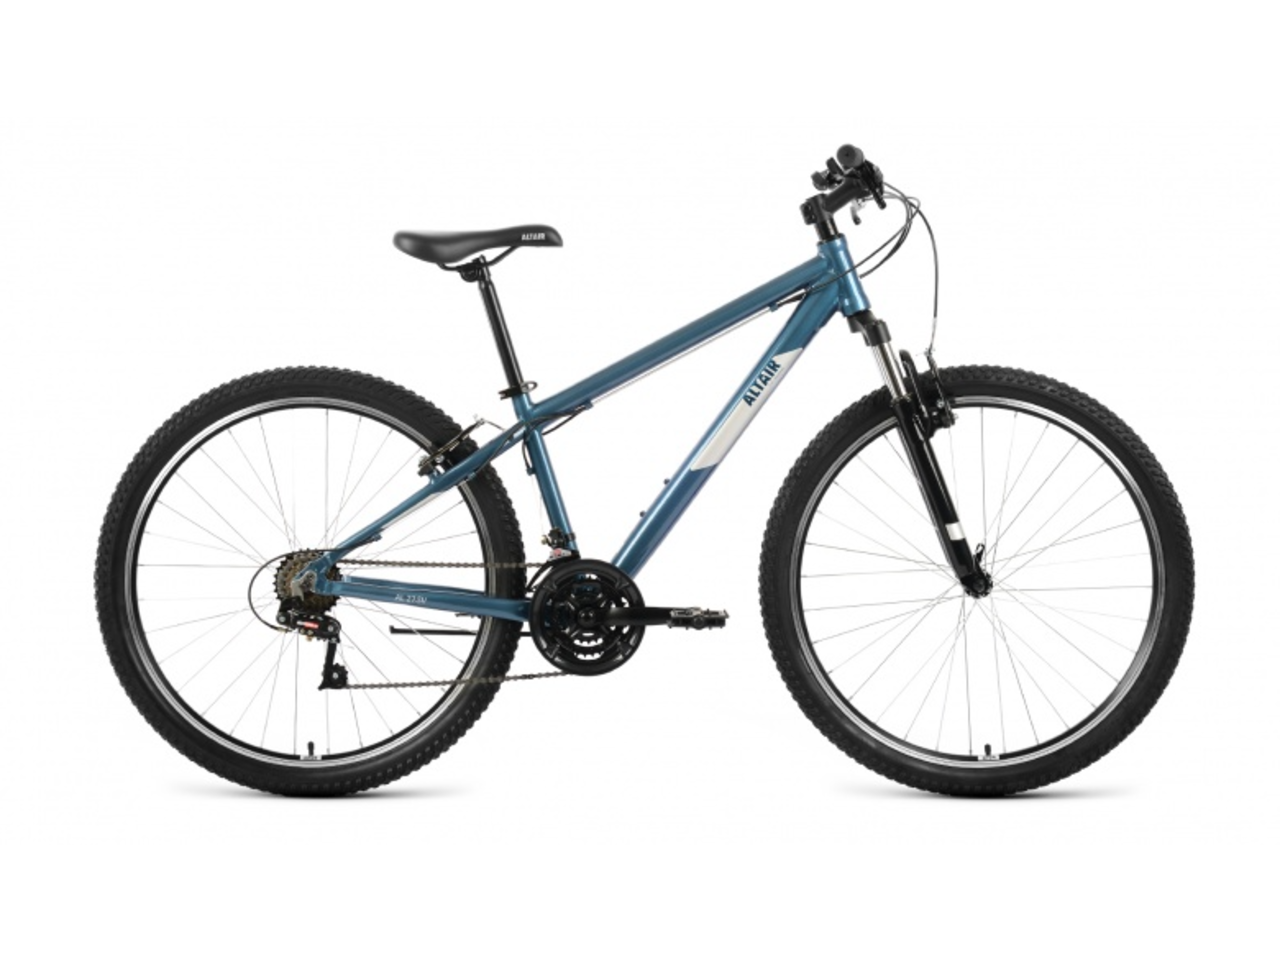 Велосипед ALTAIR AL 27.5 V (17, темно-синий/серебристый, 2022)